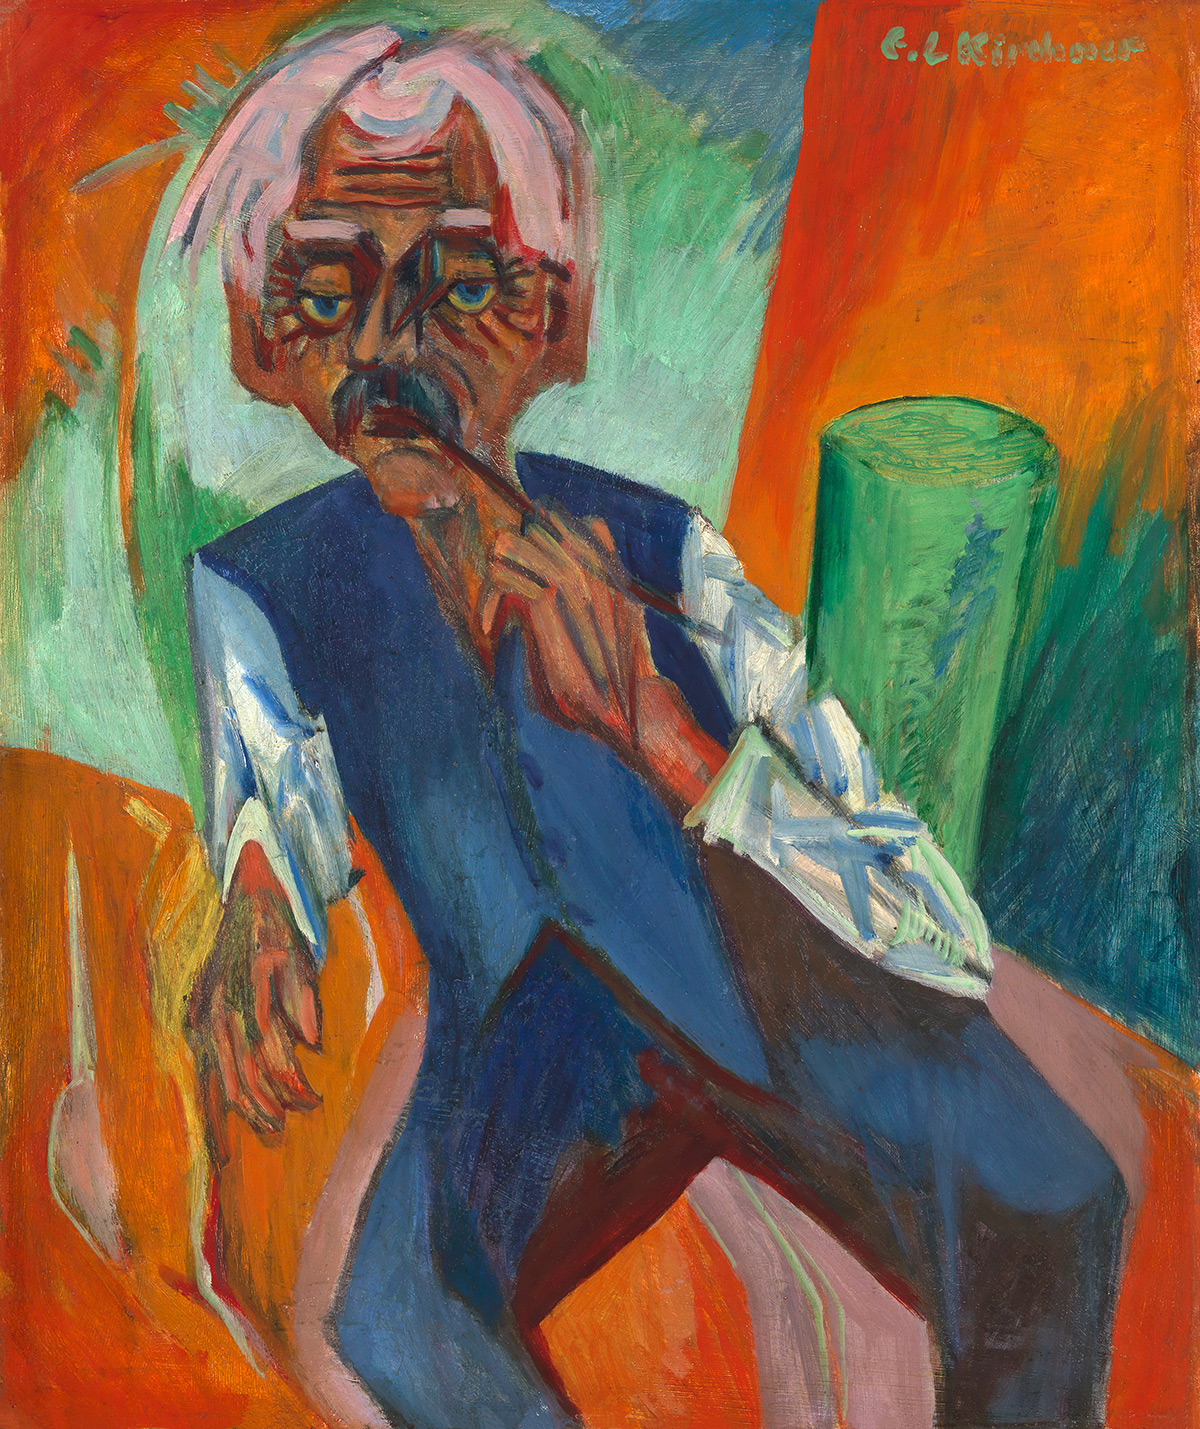 Abbildung: Ernst Ludwig Kirchner, Old Farmer, 1919/20, oil on canvas, Buchheim Museum der Phantasie